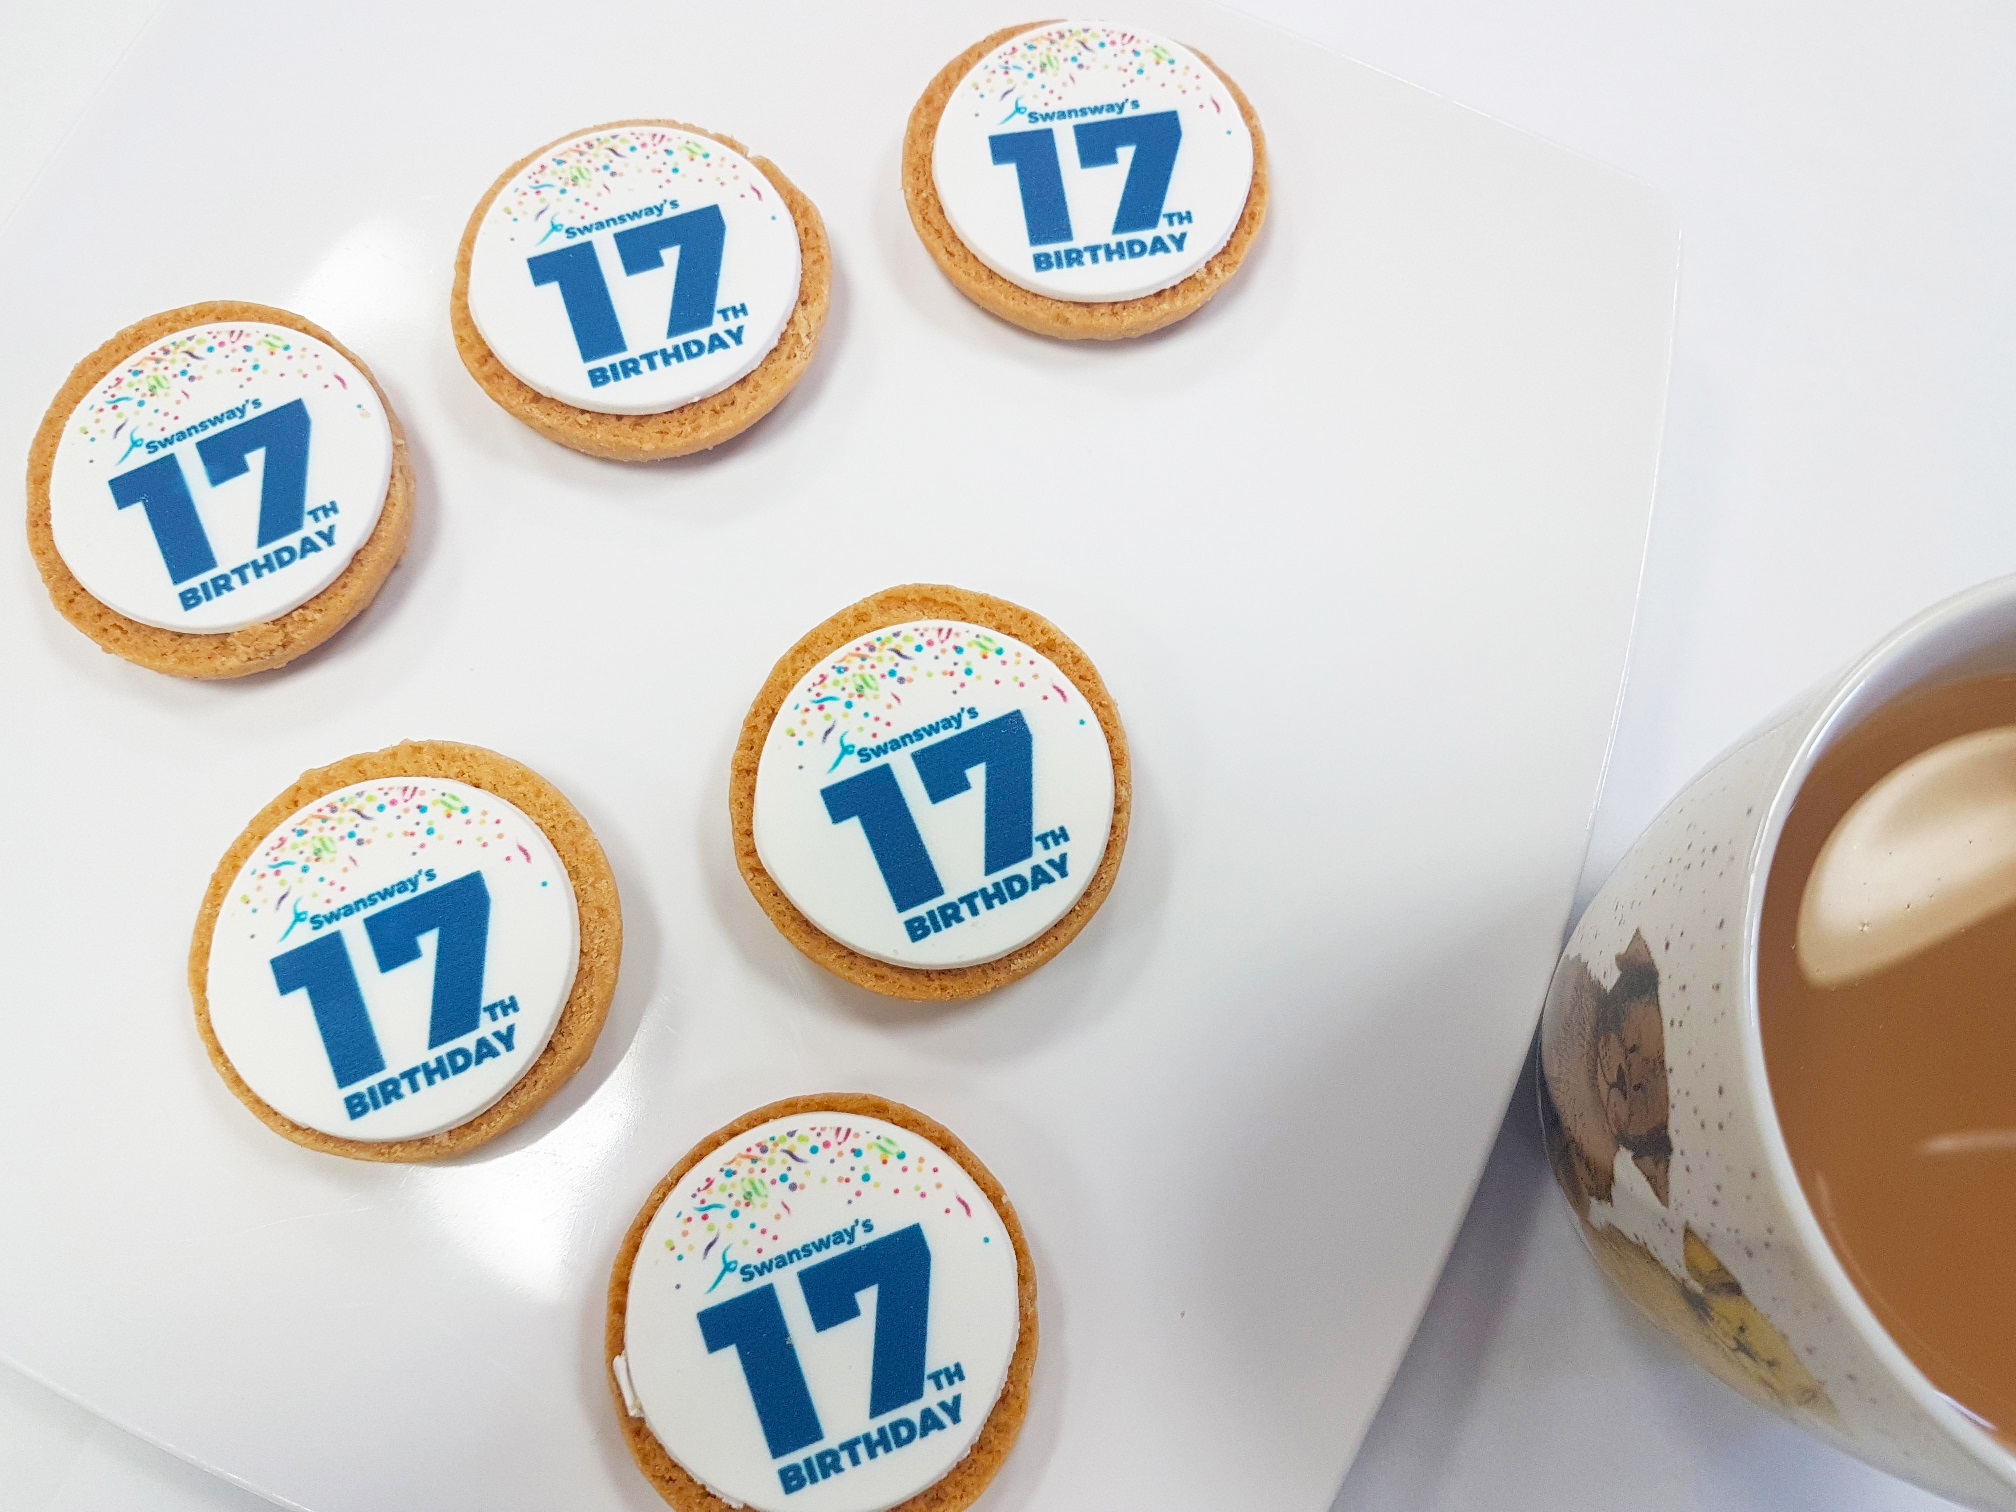 Swansway Motor Group celebrates 17th birthday!